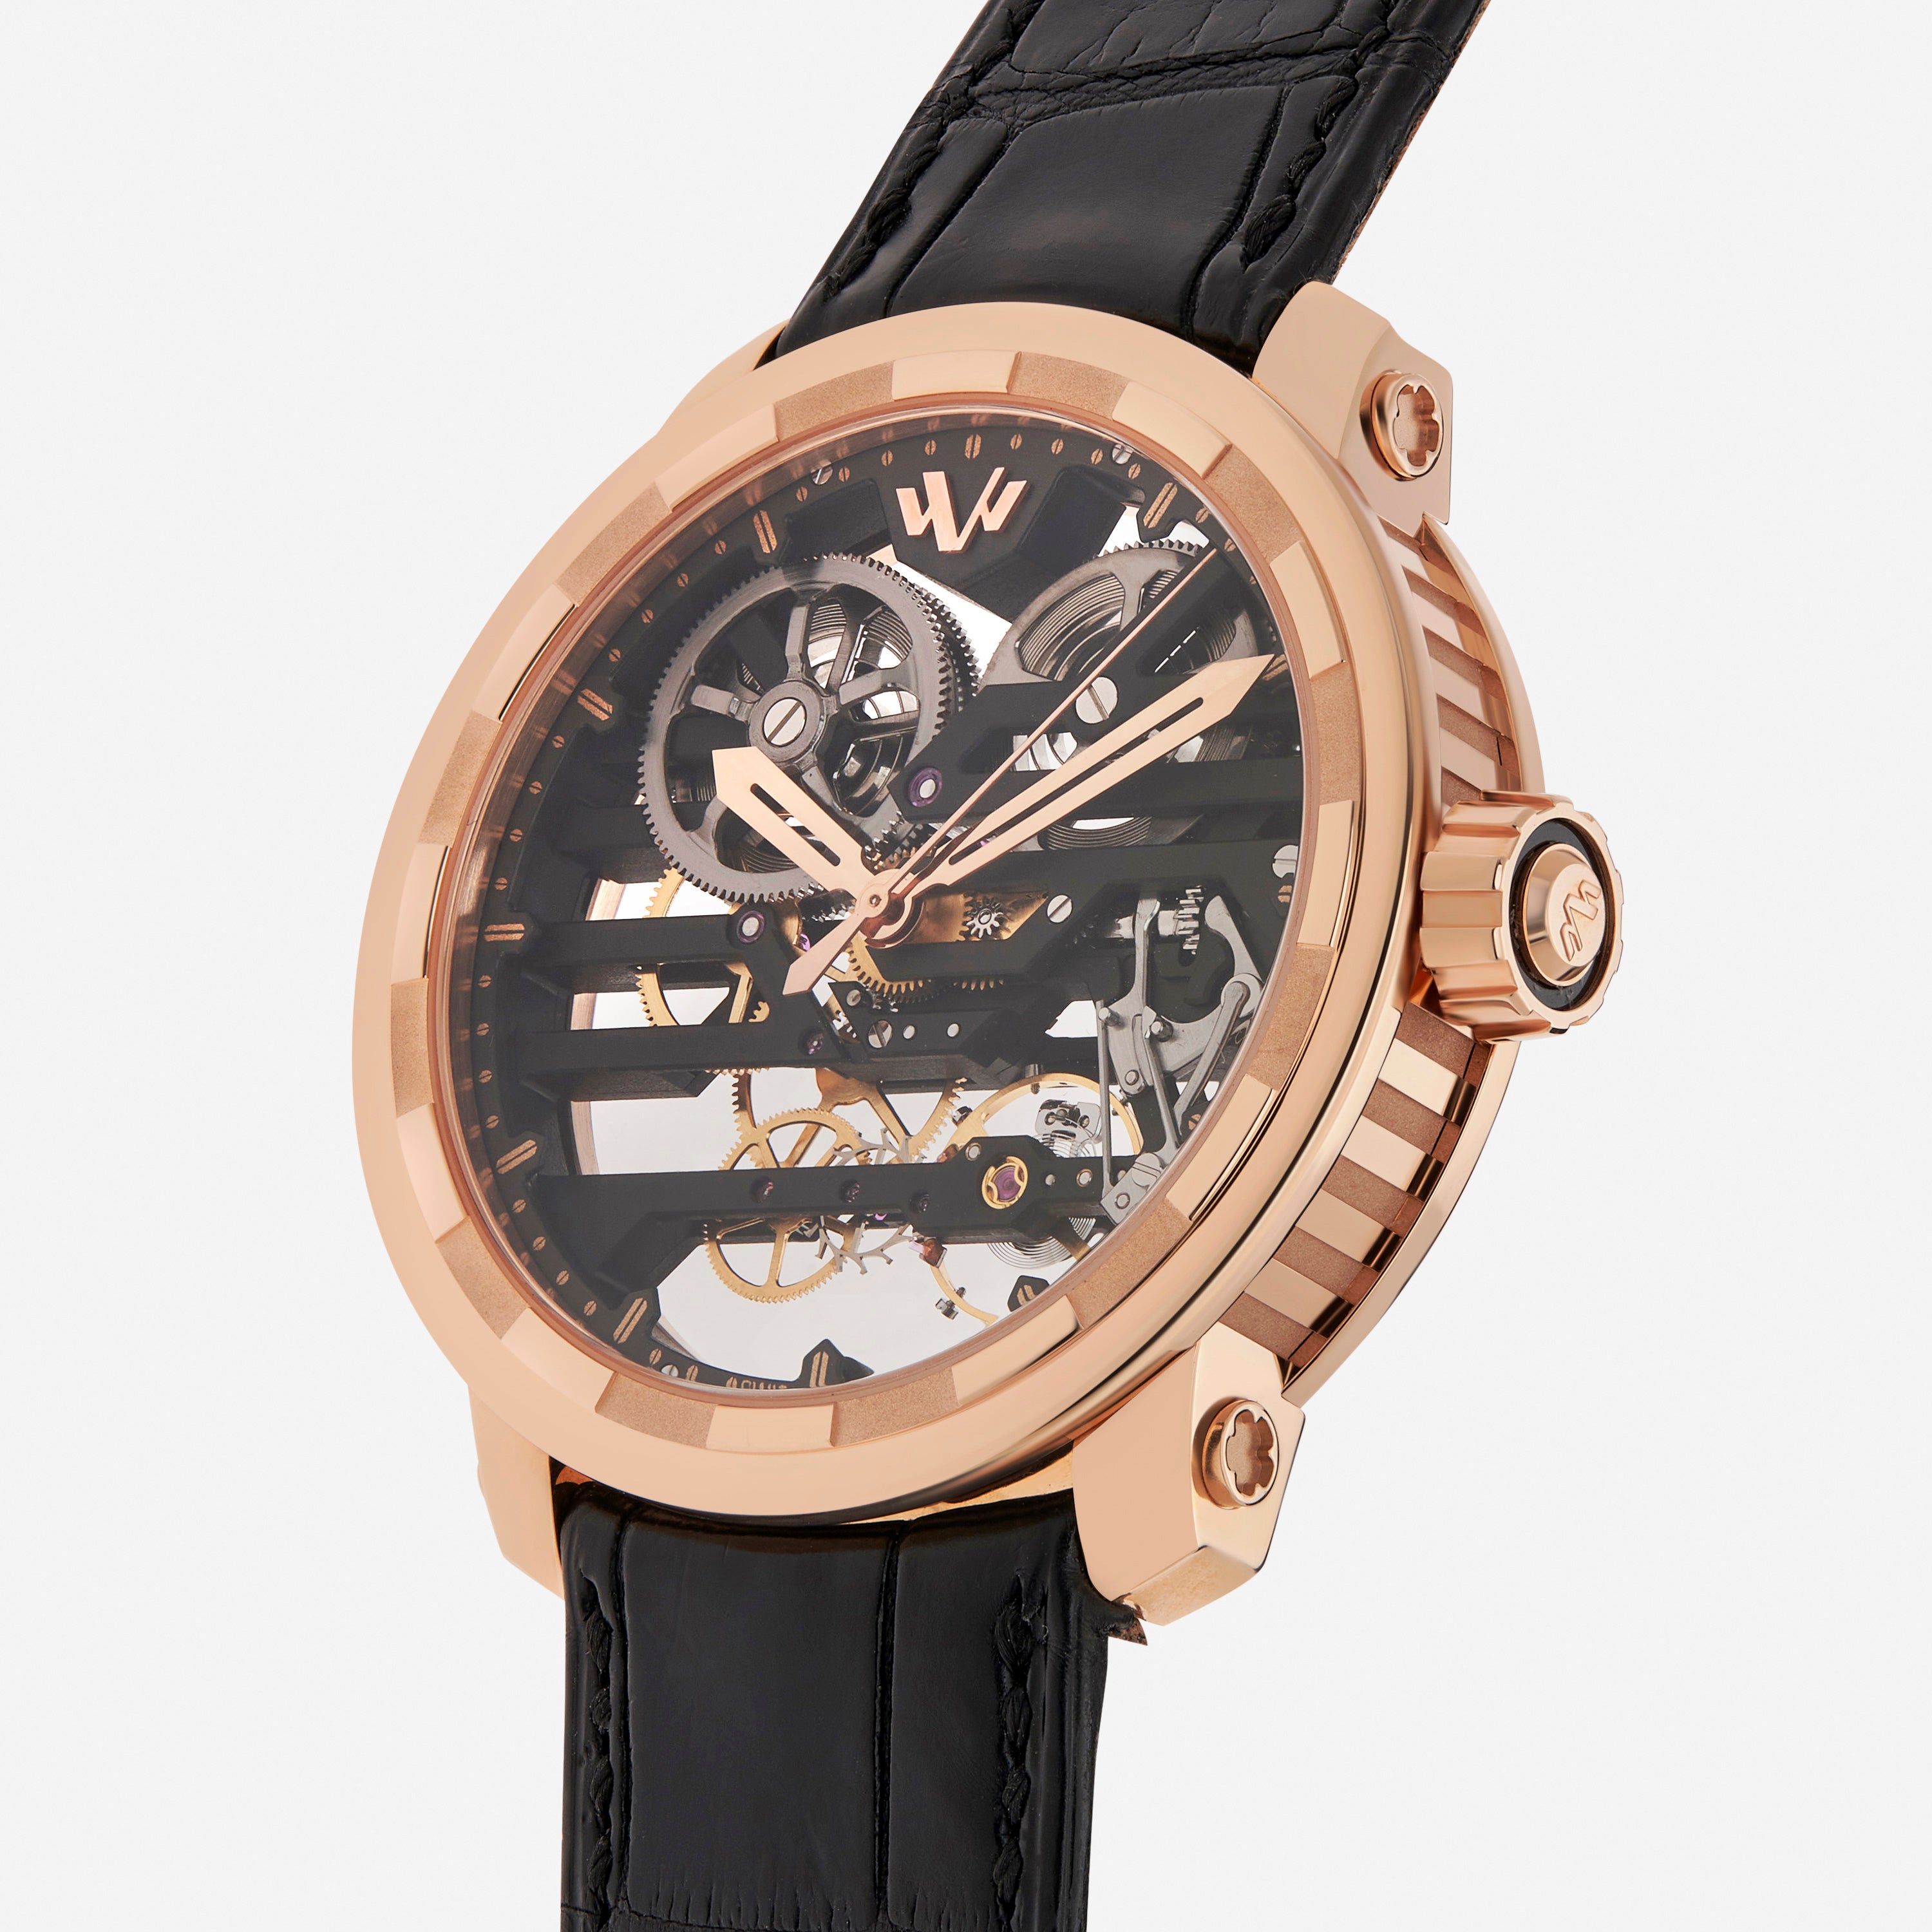 DeWitt - Twenty-8-Eight 18k Rose Gold and Titanium – Every Watch Has a Story